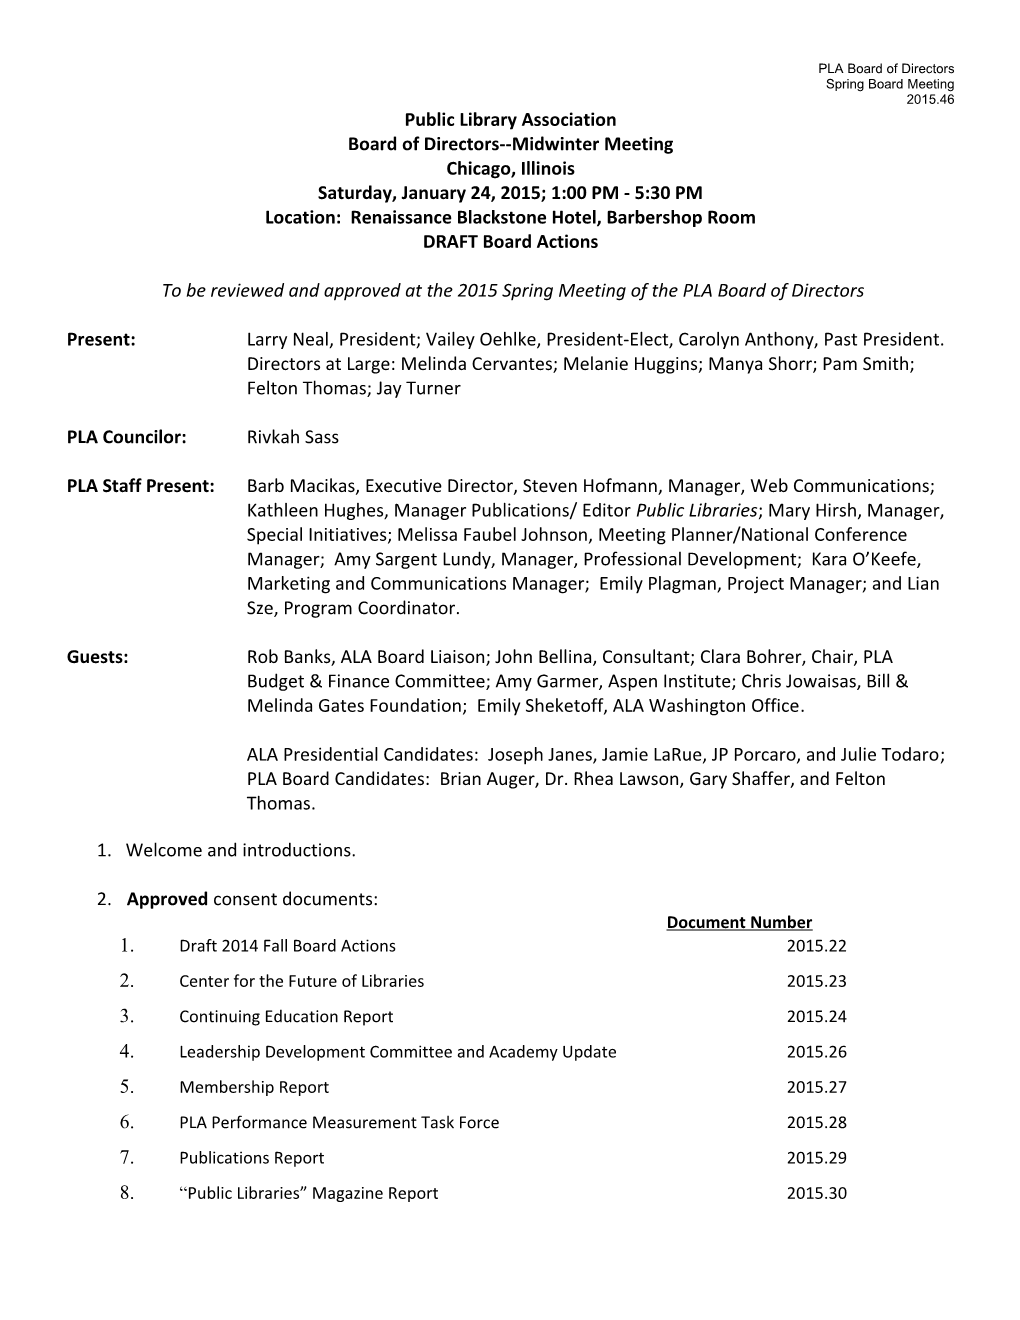 DRAFT Agenda Items for the Fall 2009 PLA Board